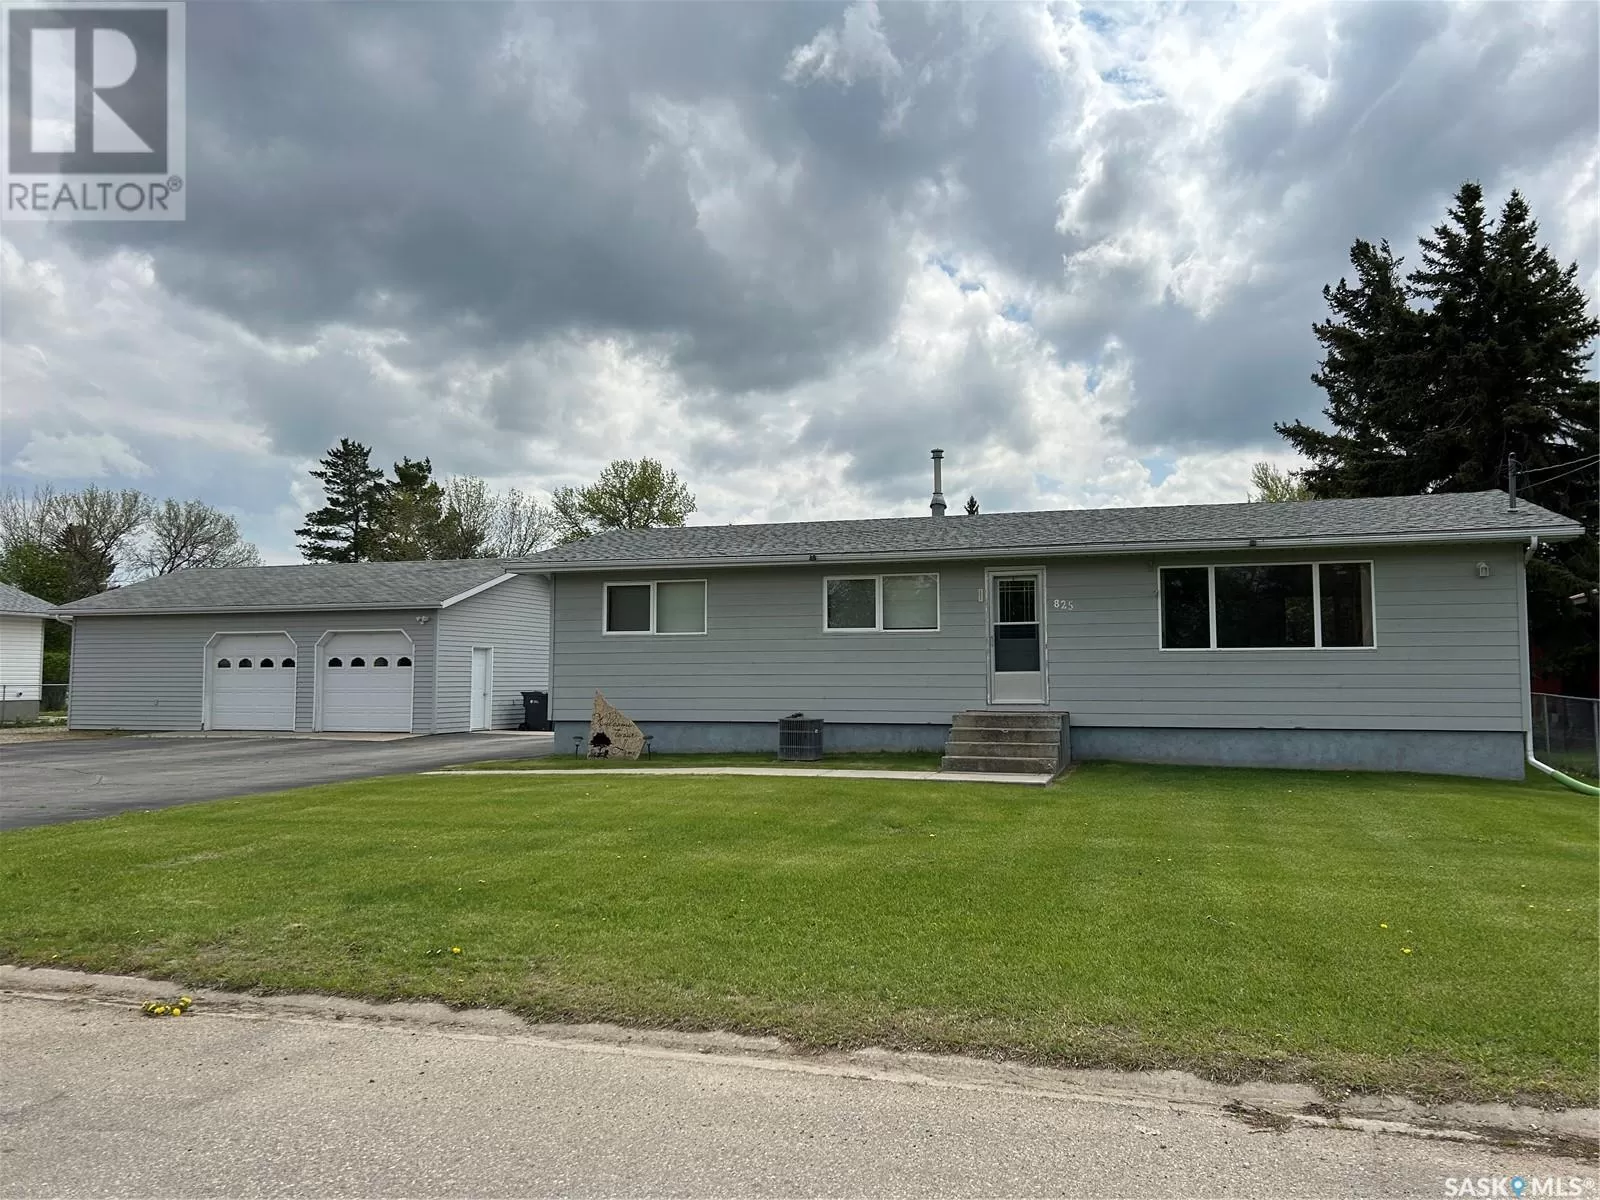 House for rent: 825 Walsh Avenue, Oxbow, Saskatchewan S0C 2B0